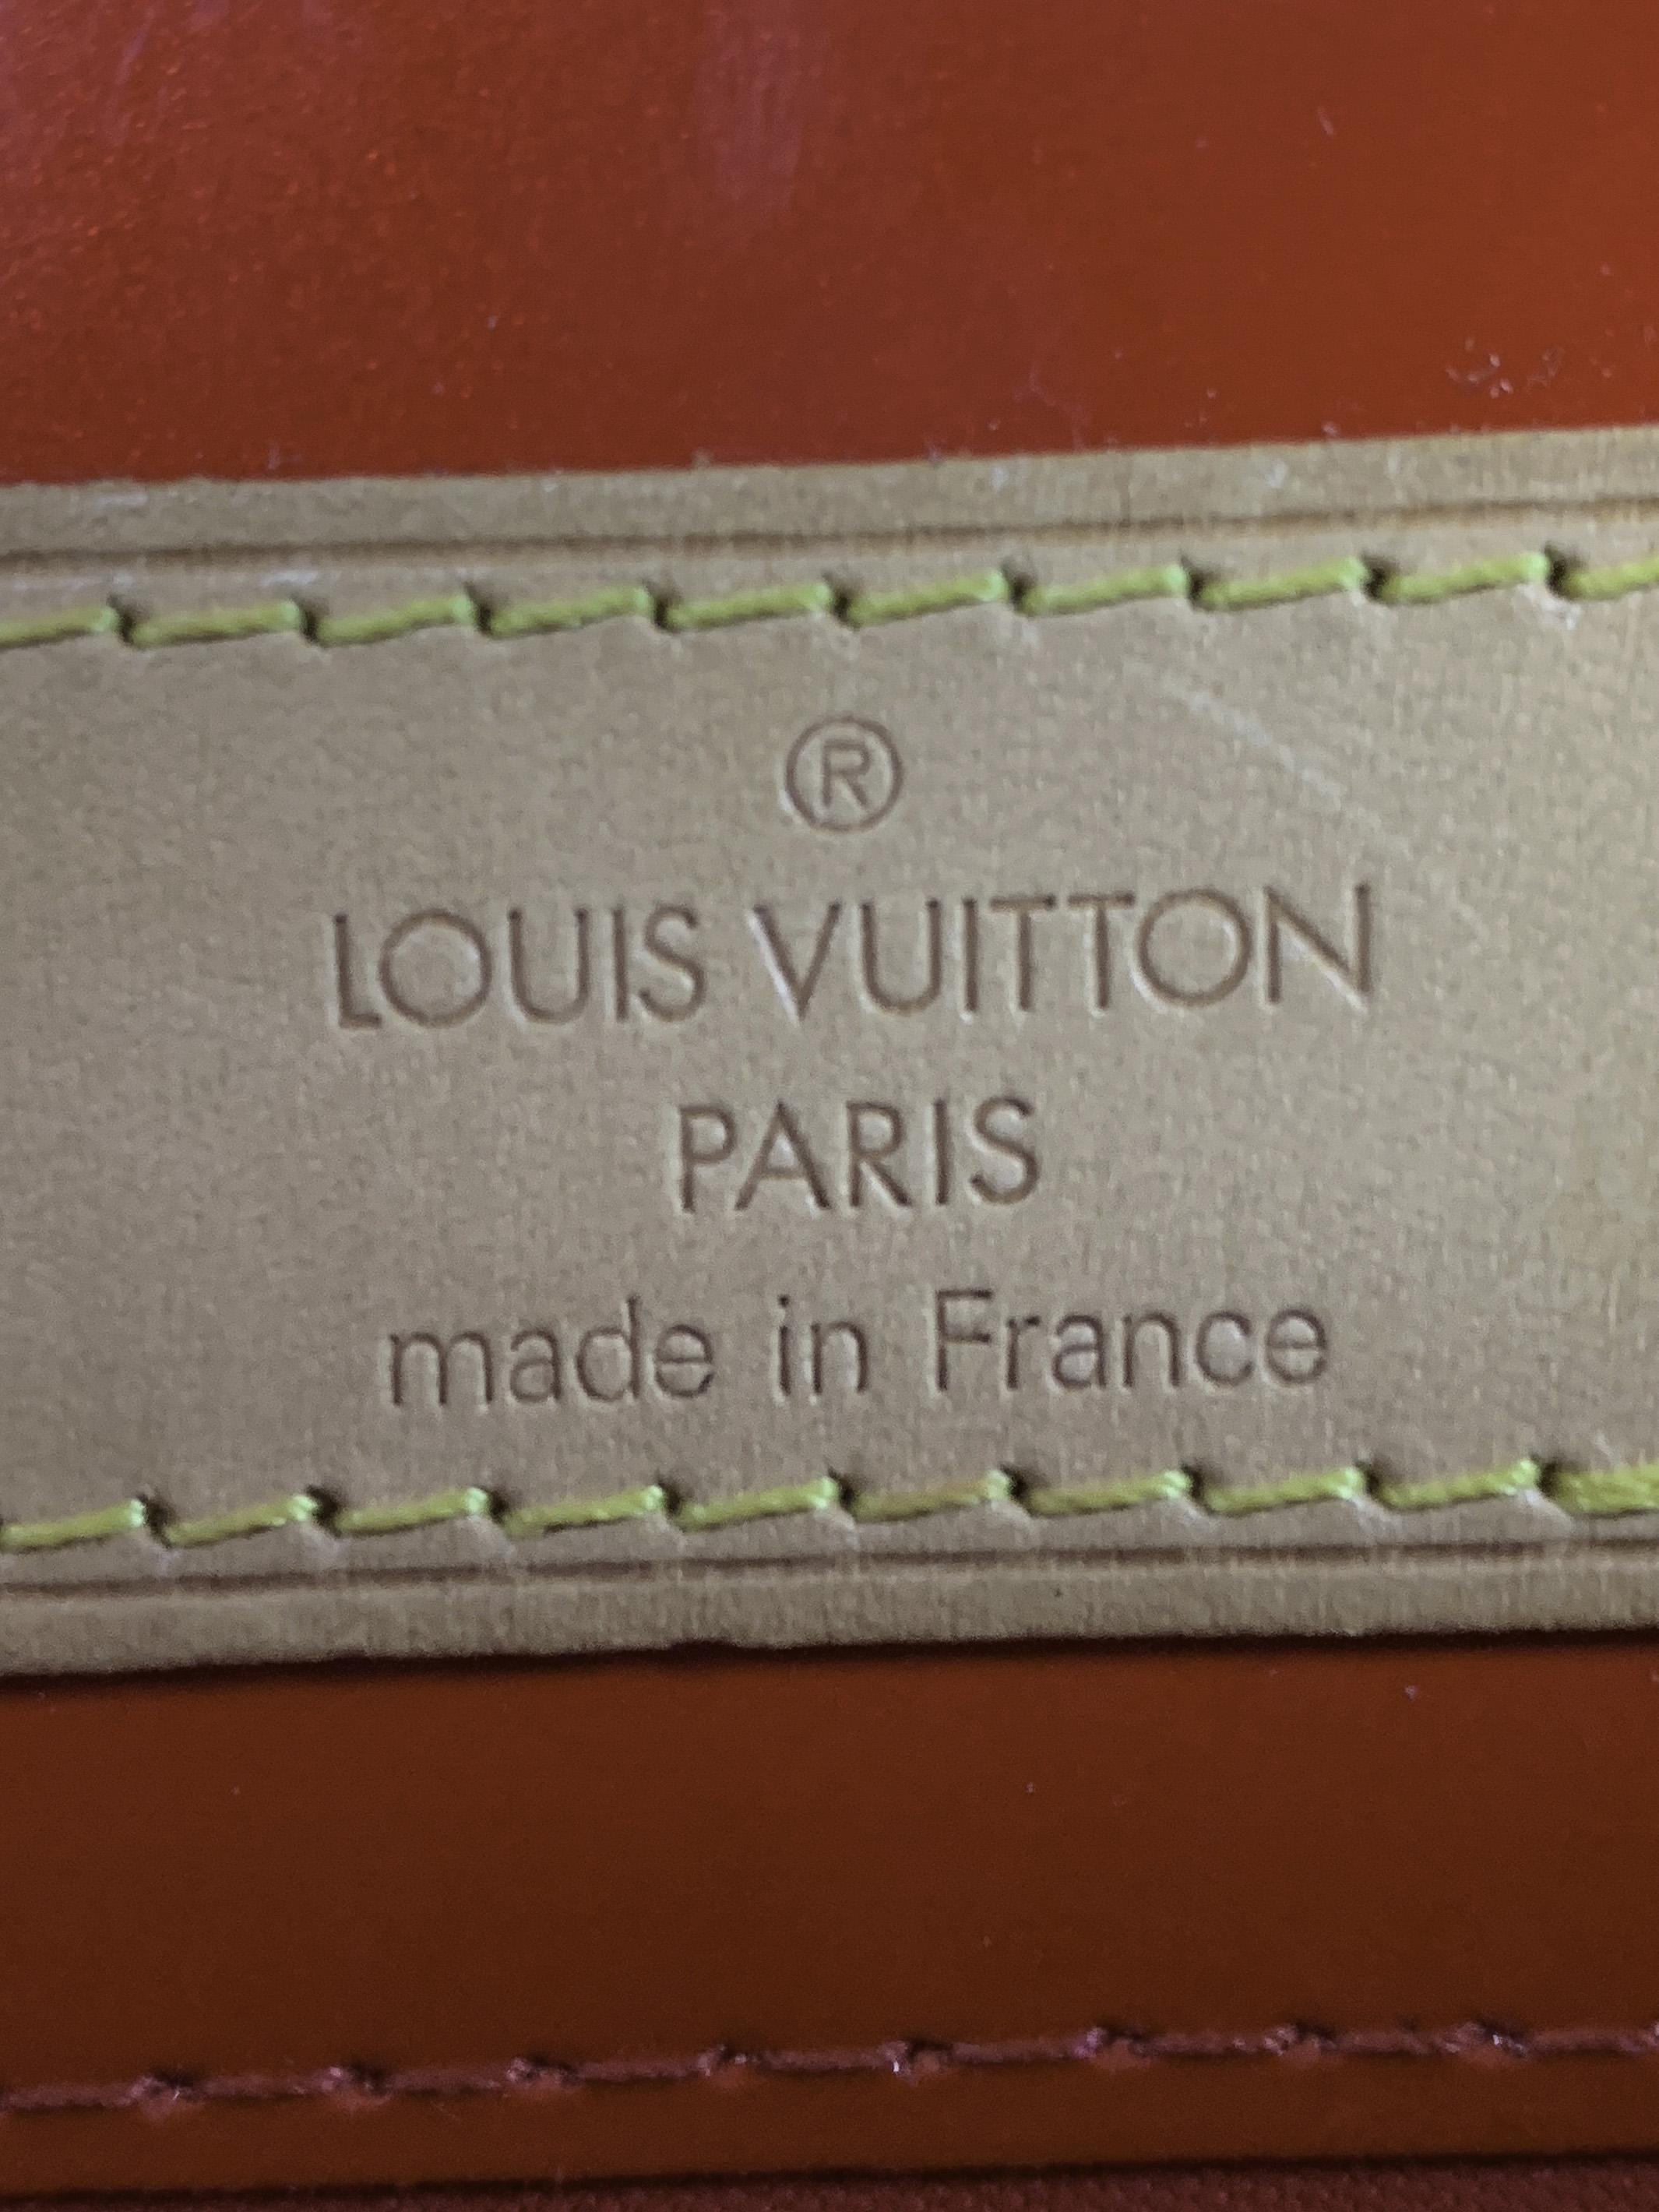 Sold at Auction: AUTHENTIC LOUIS VUITTON MONOGRAM VERNIS PATENT